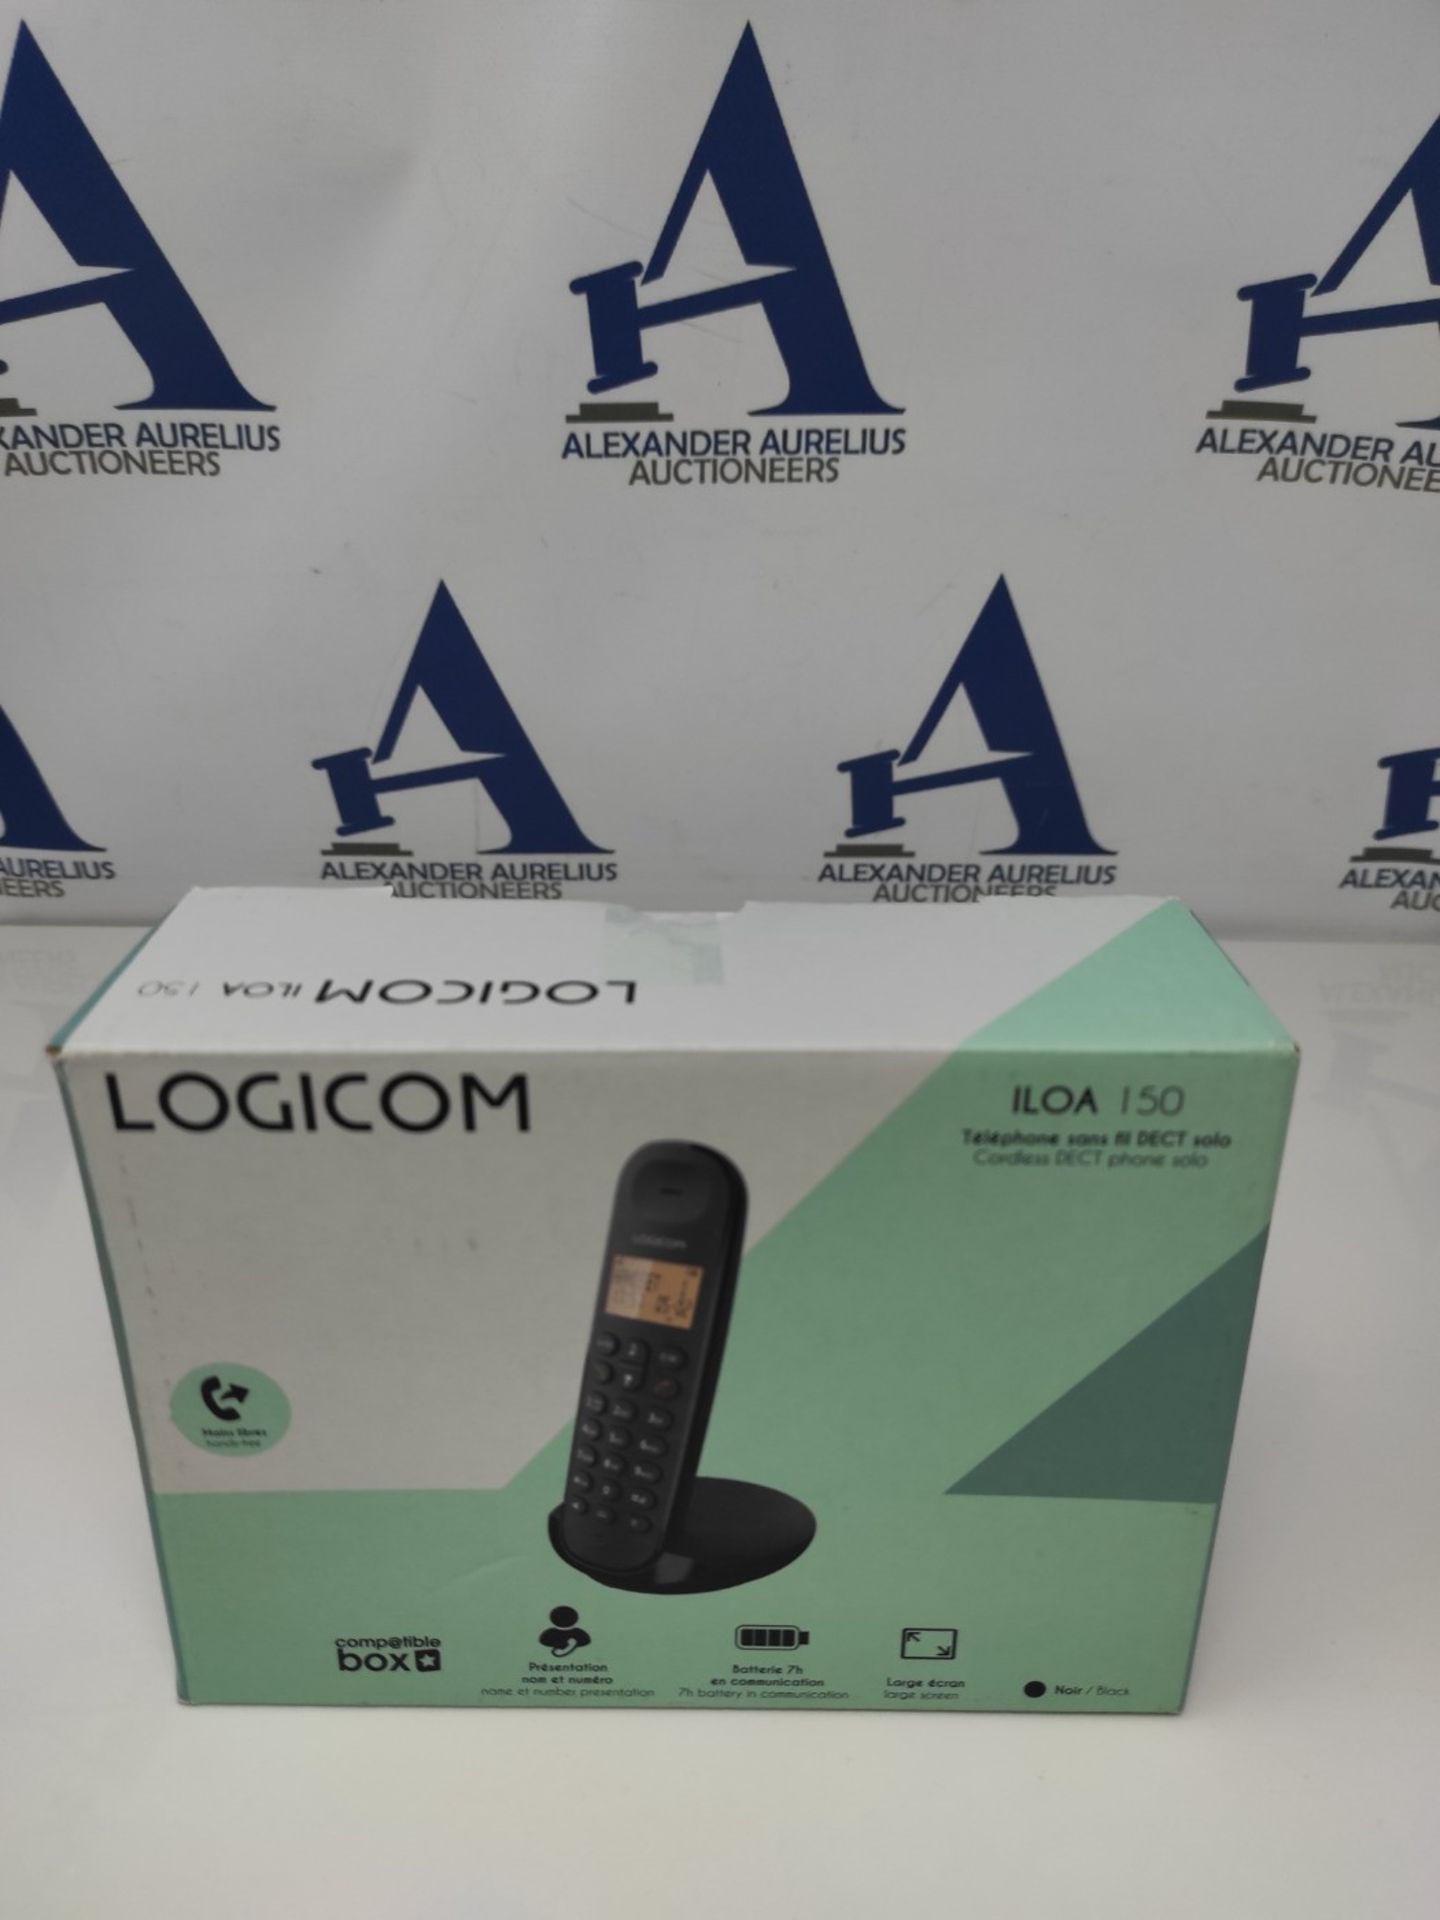 Logicom ILOA 150 Cordless Fixed Telephone without Answering Machine - Solo - Analog an - Image 5 of 6